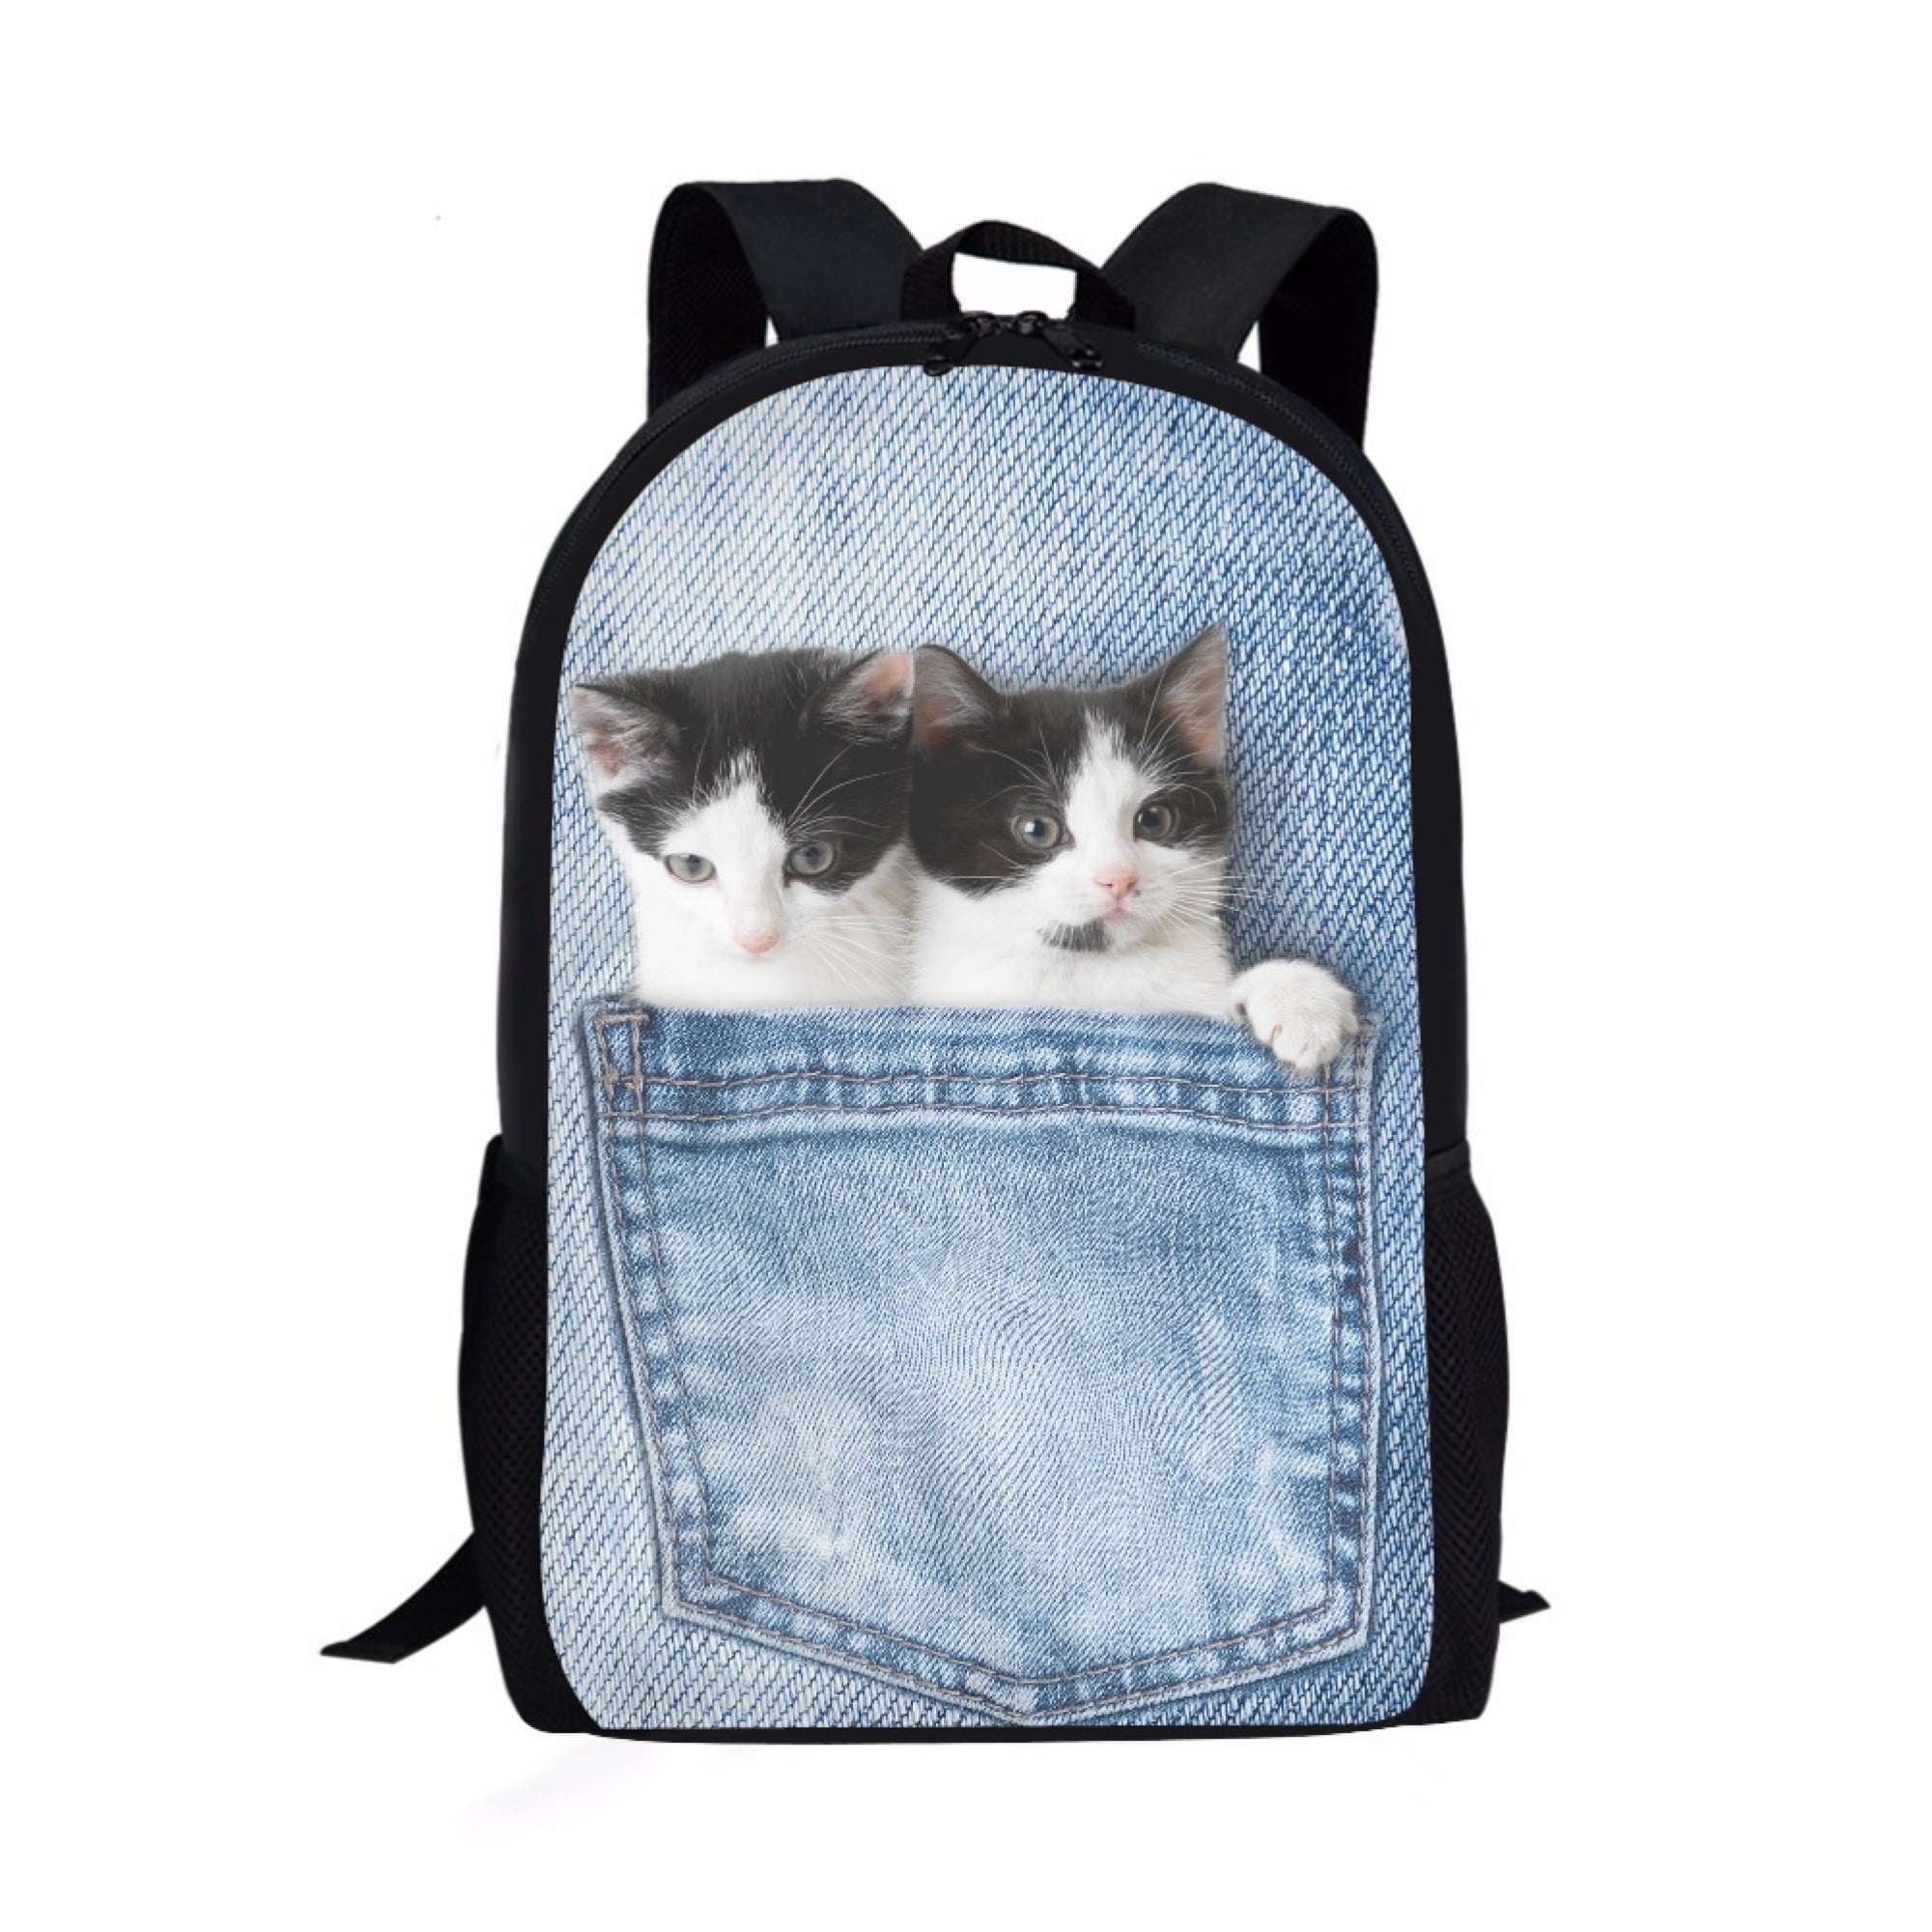 BETSEY JOHNSON Jeweled Black Kitty Cat Backpack Purse Preowned | eBay